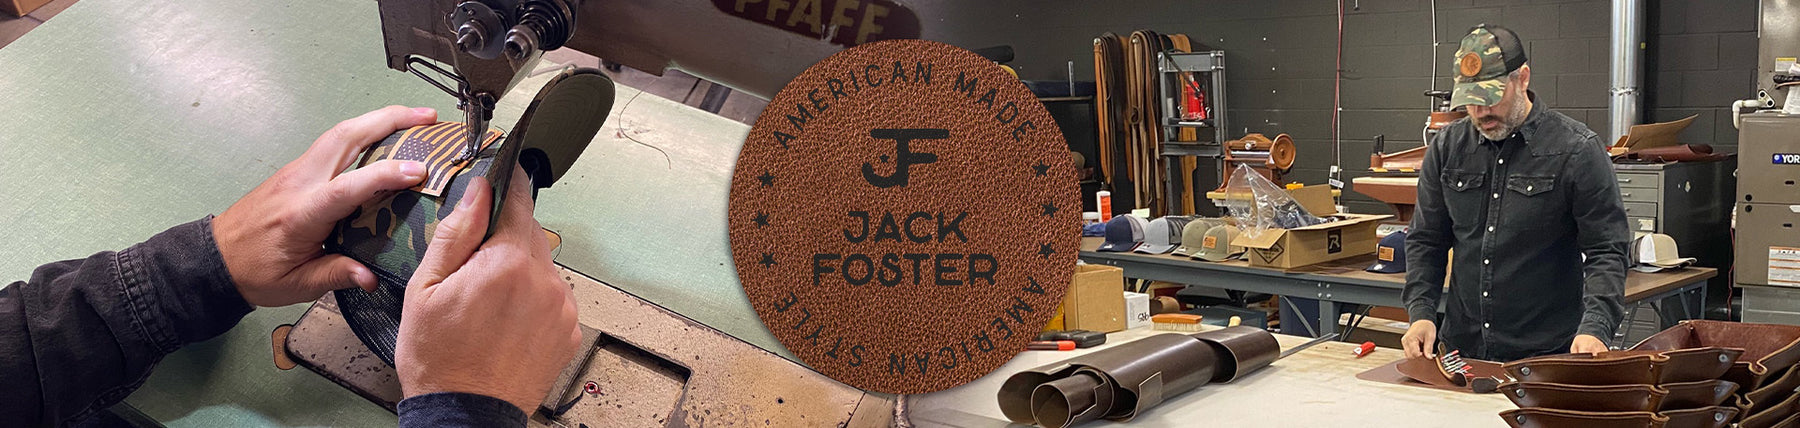 Jack Foster